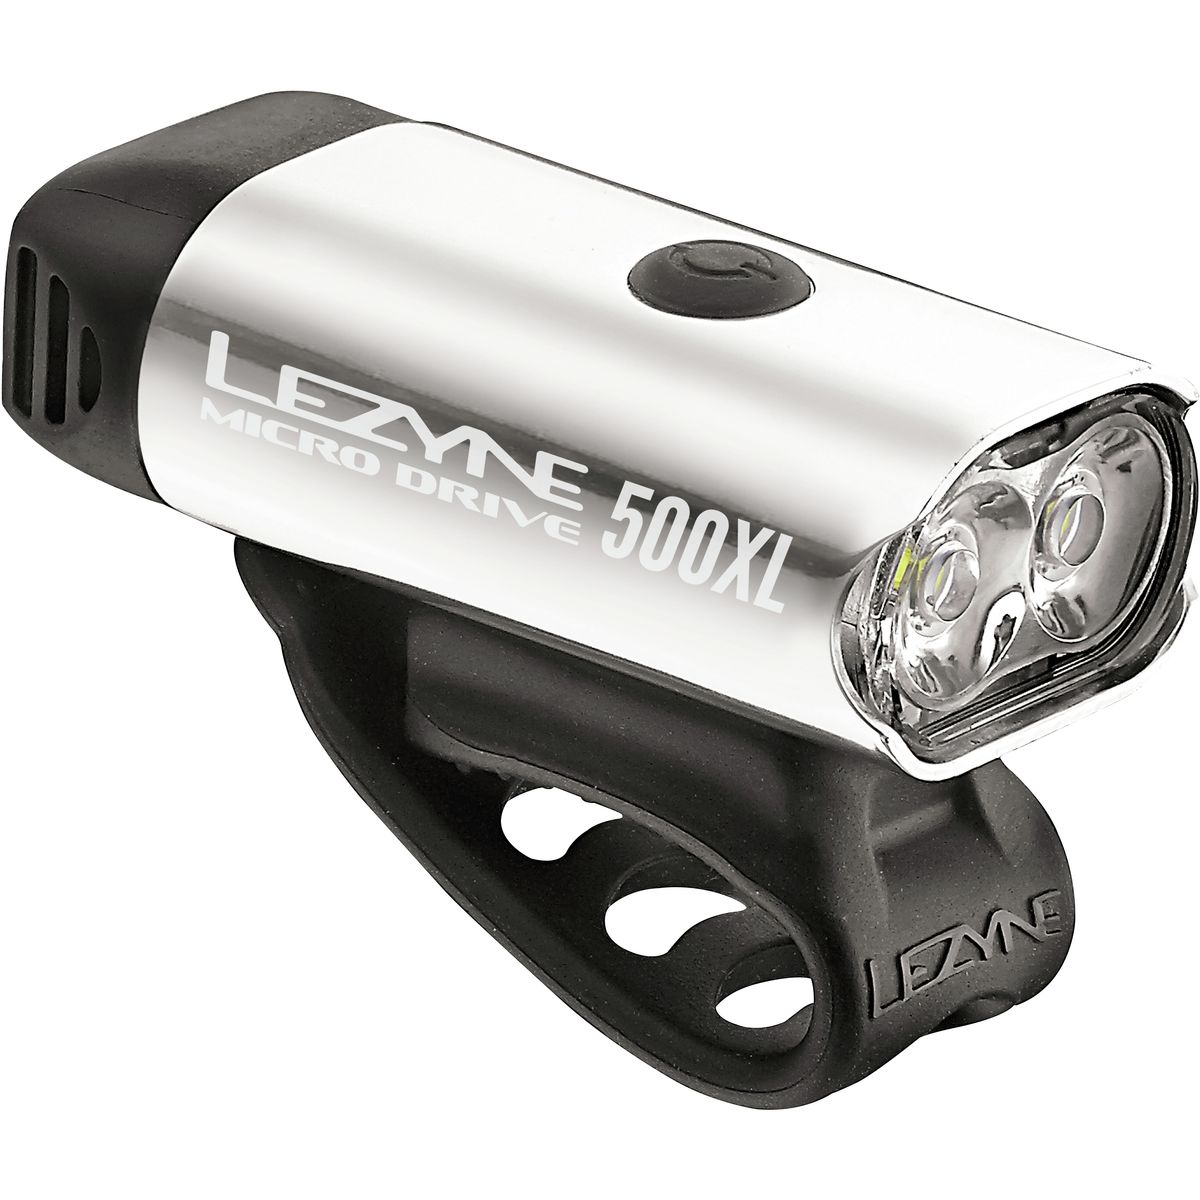 Lezyne Micro Drive 500XL Headlight